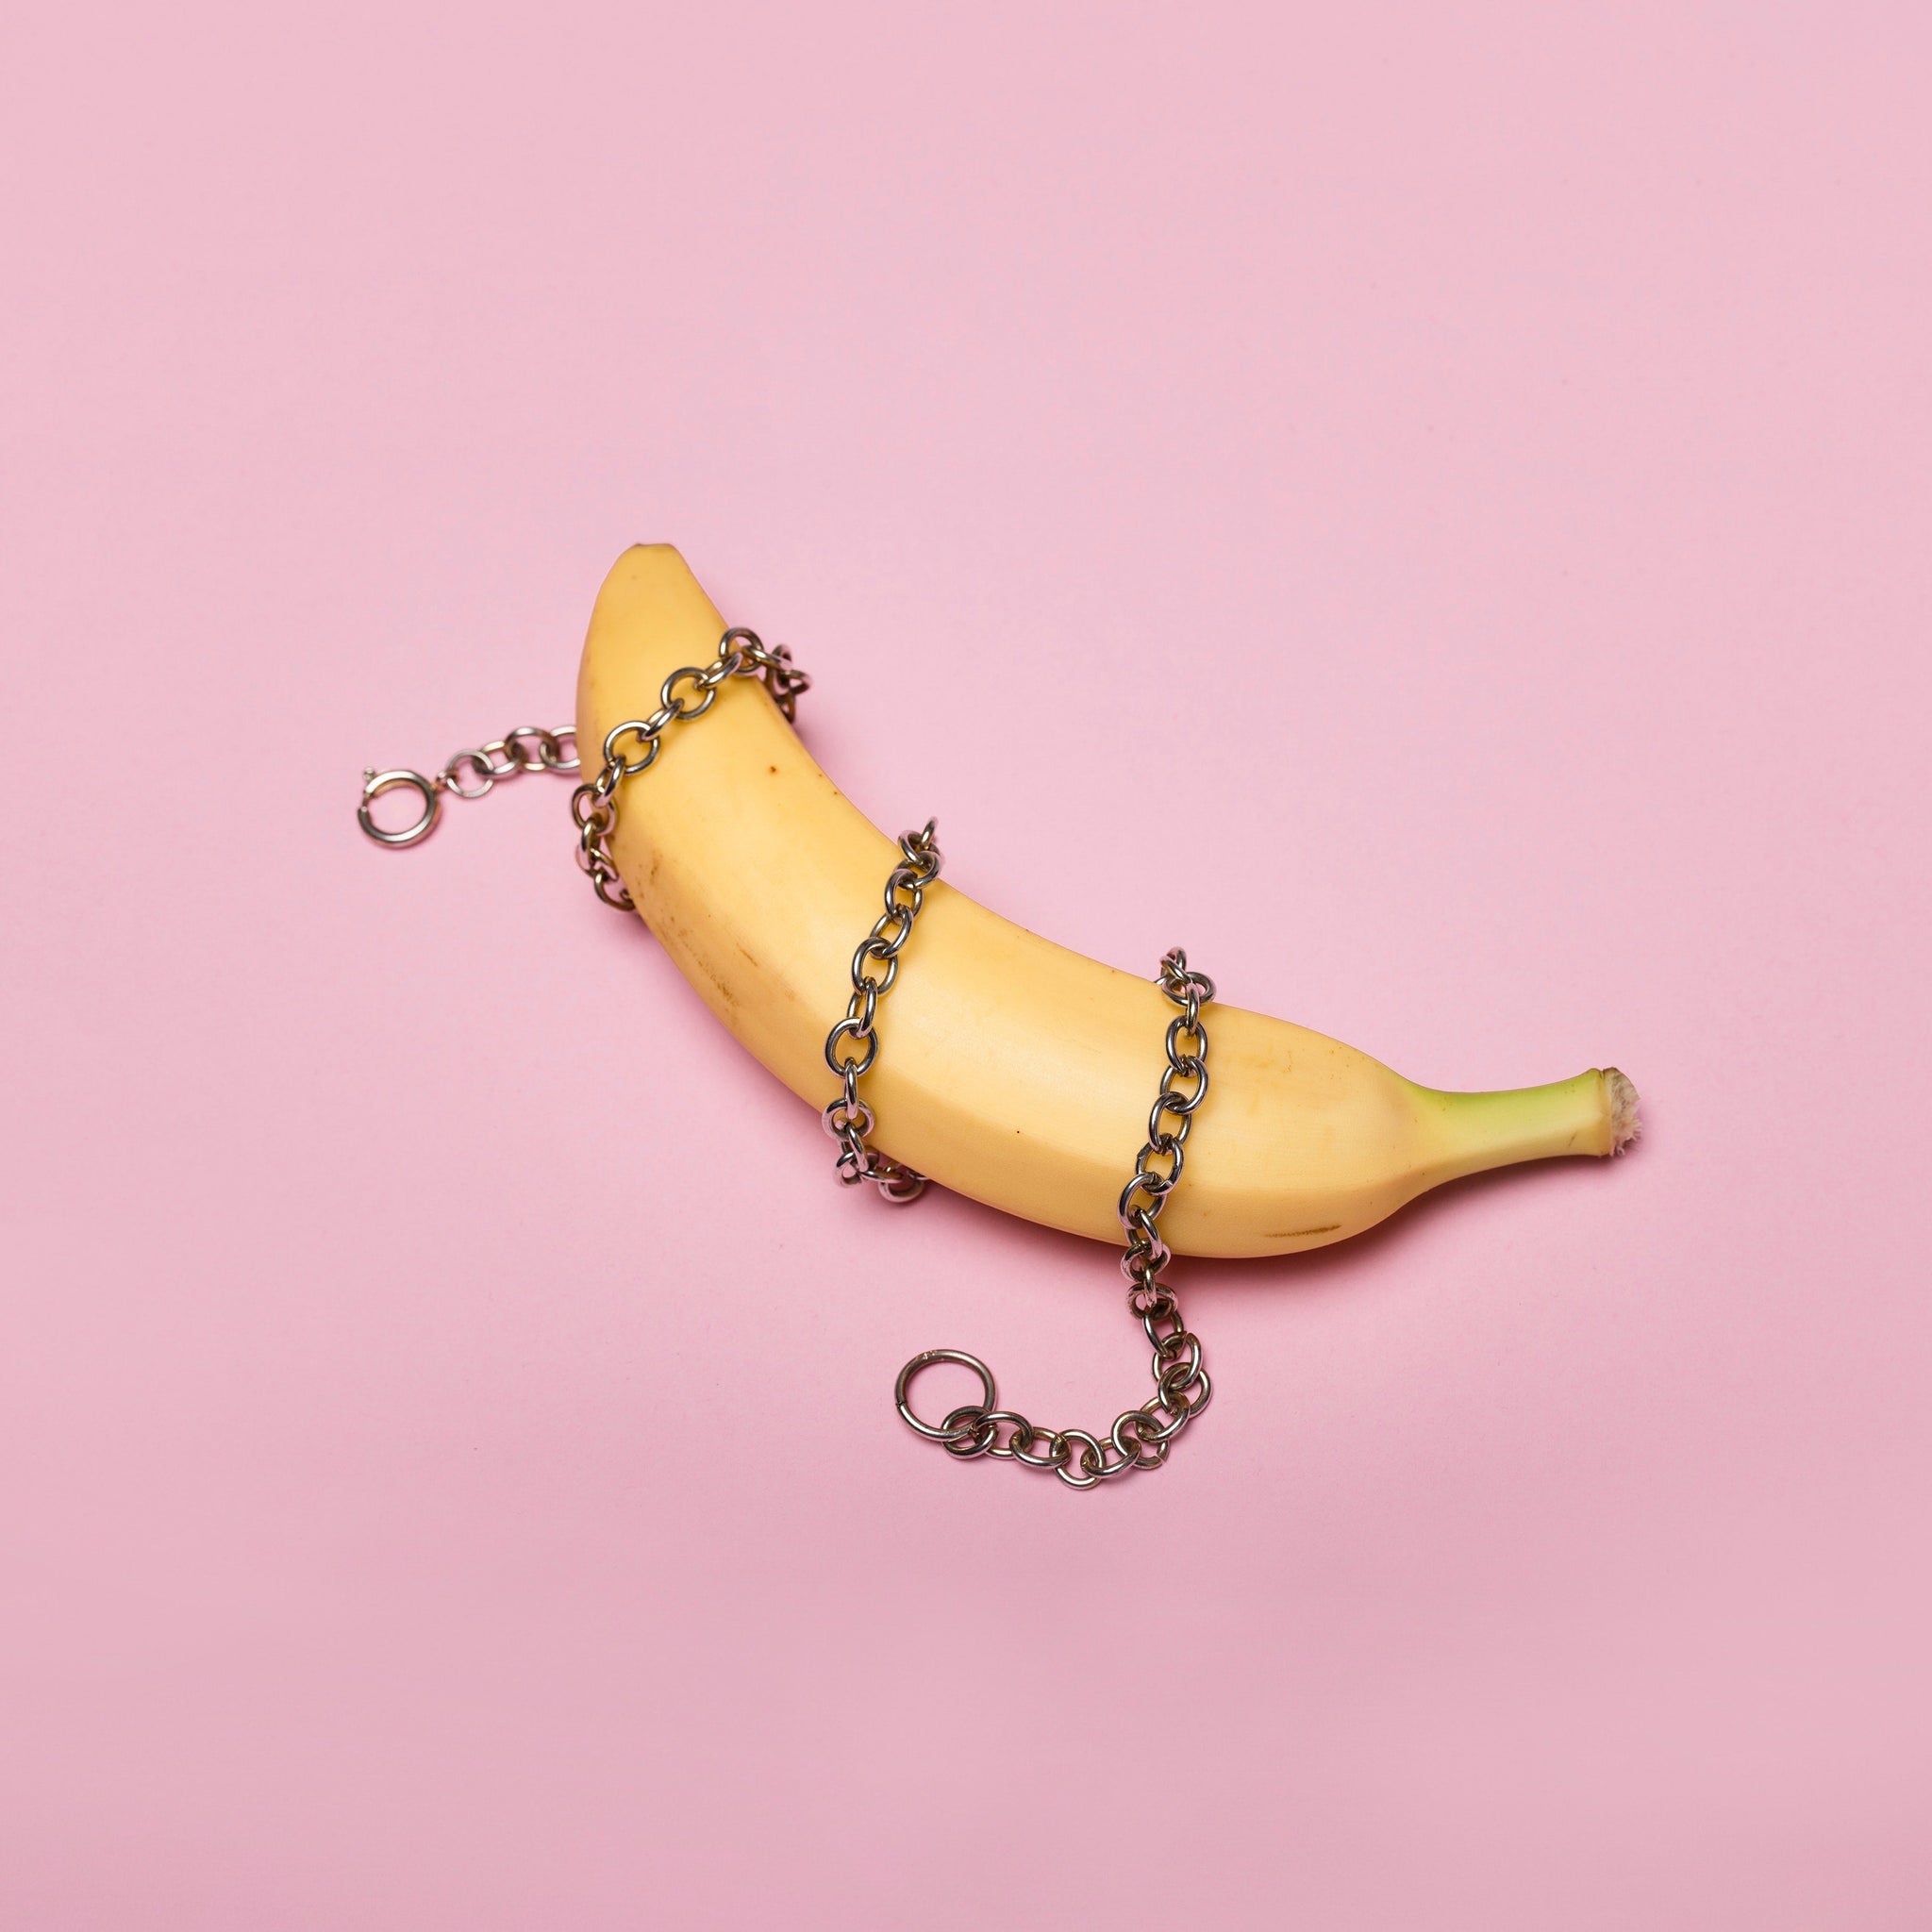 Chain wrapped around a banana